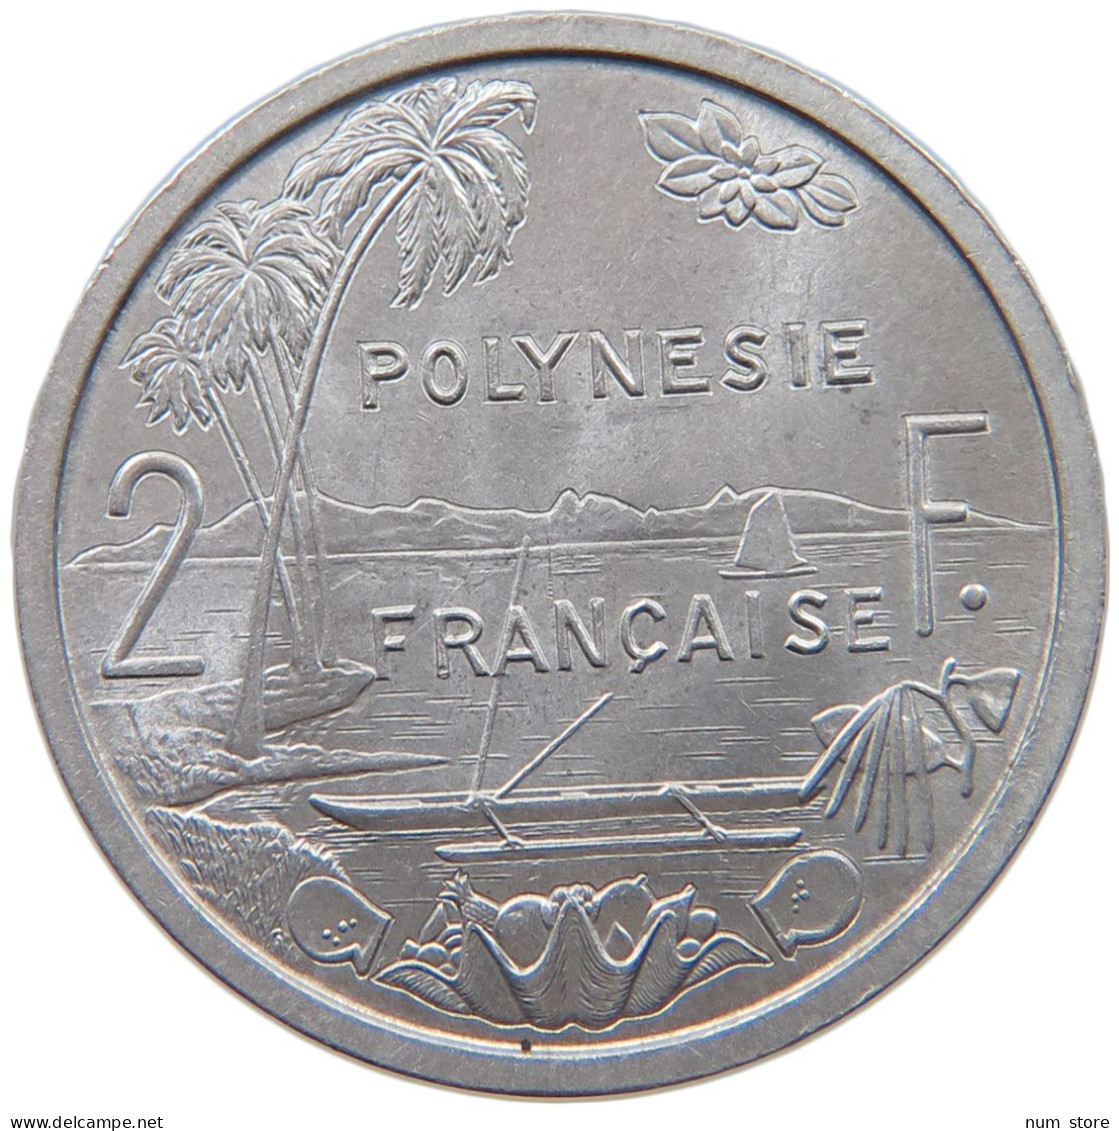 POLYNESIA 2 FRANCS 1965  #c019 0457 - Französisch-Polynesien